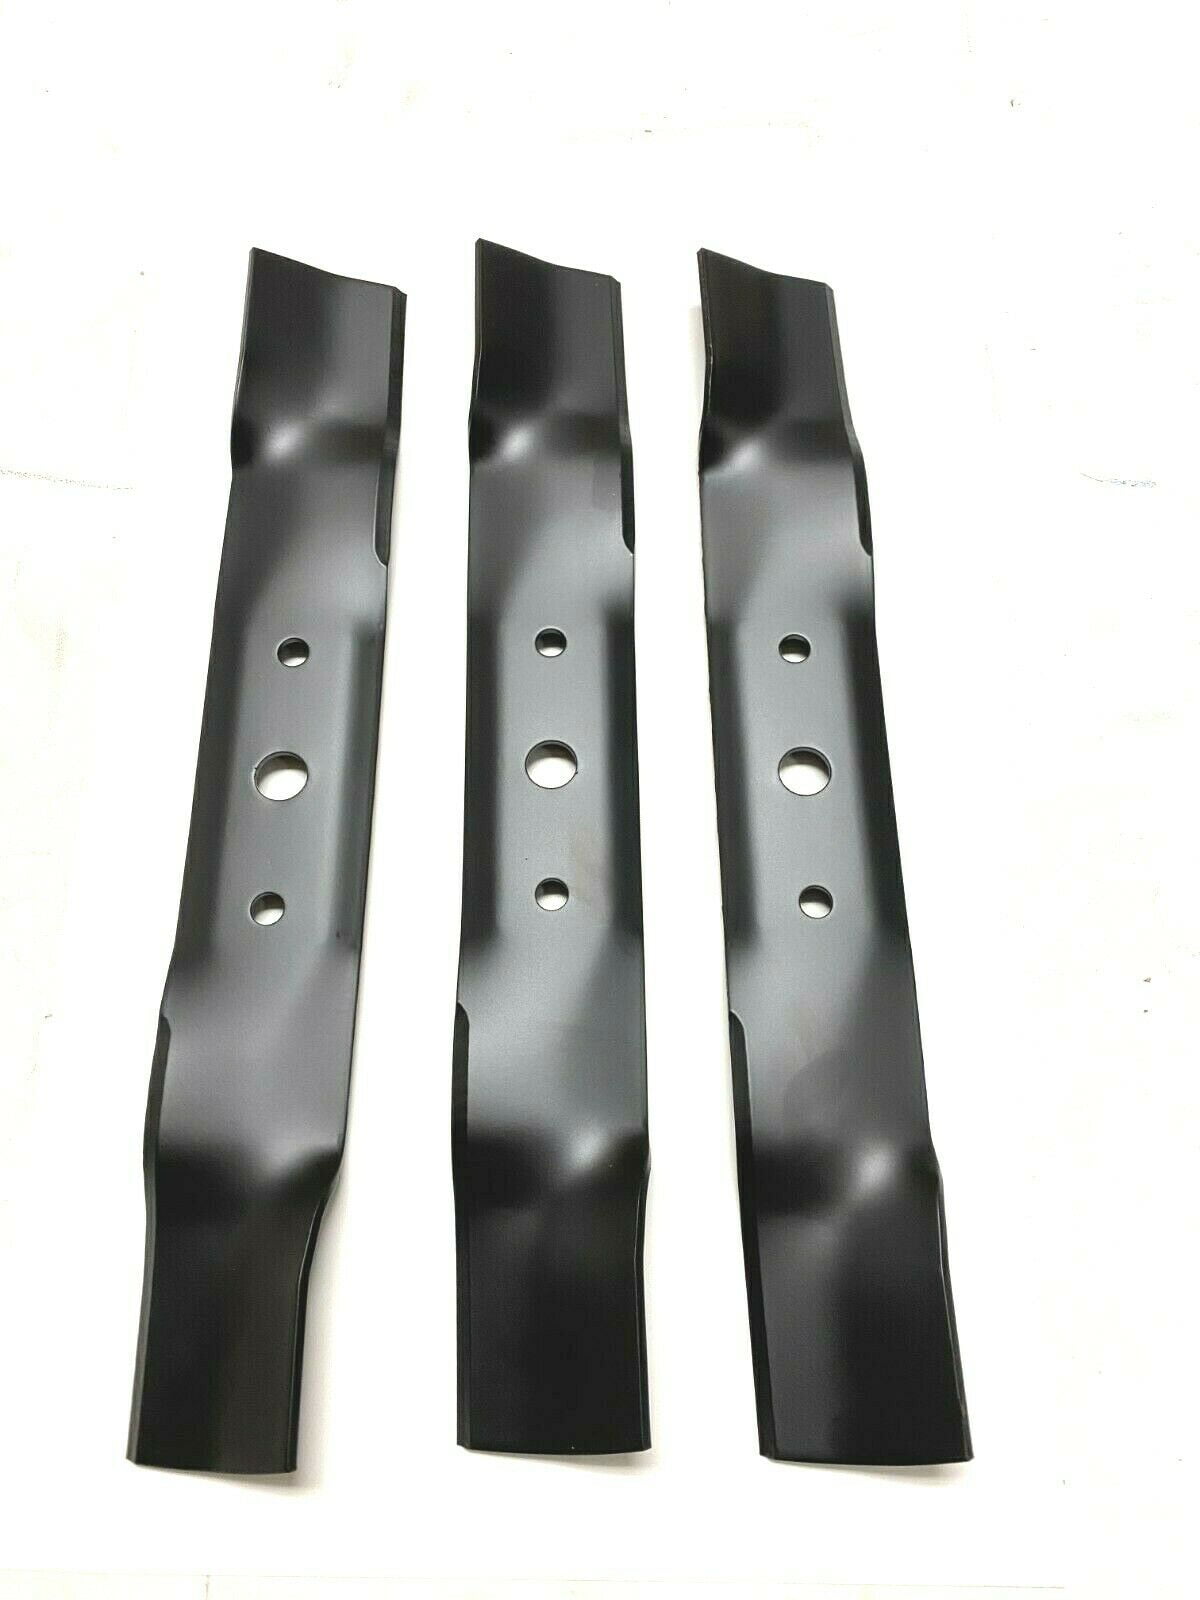 Details about   3PK Lawn Mower Blades for John Deere 48 Cut L120 L130 GX20250 GY20568 